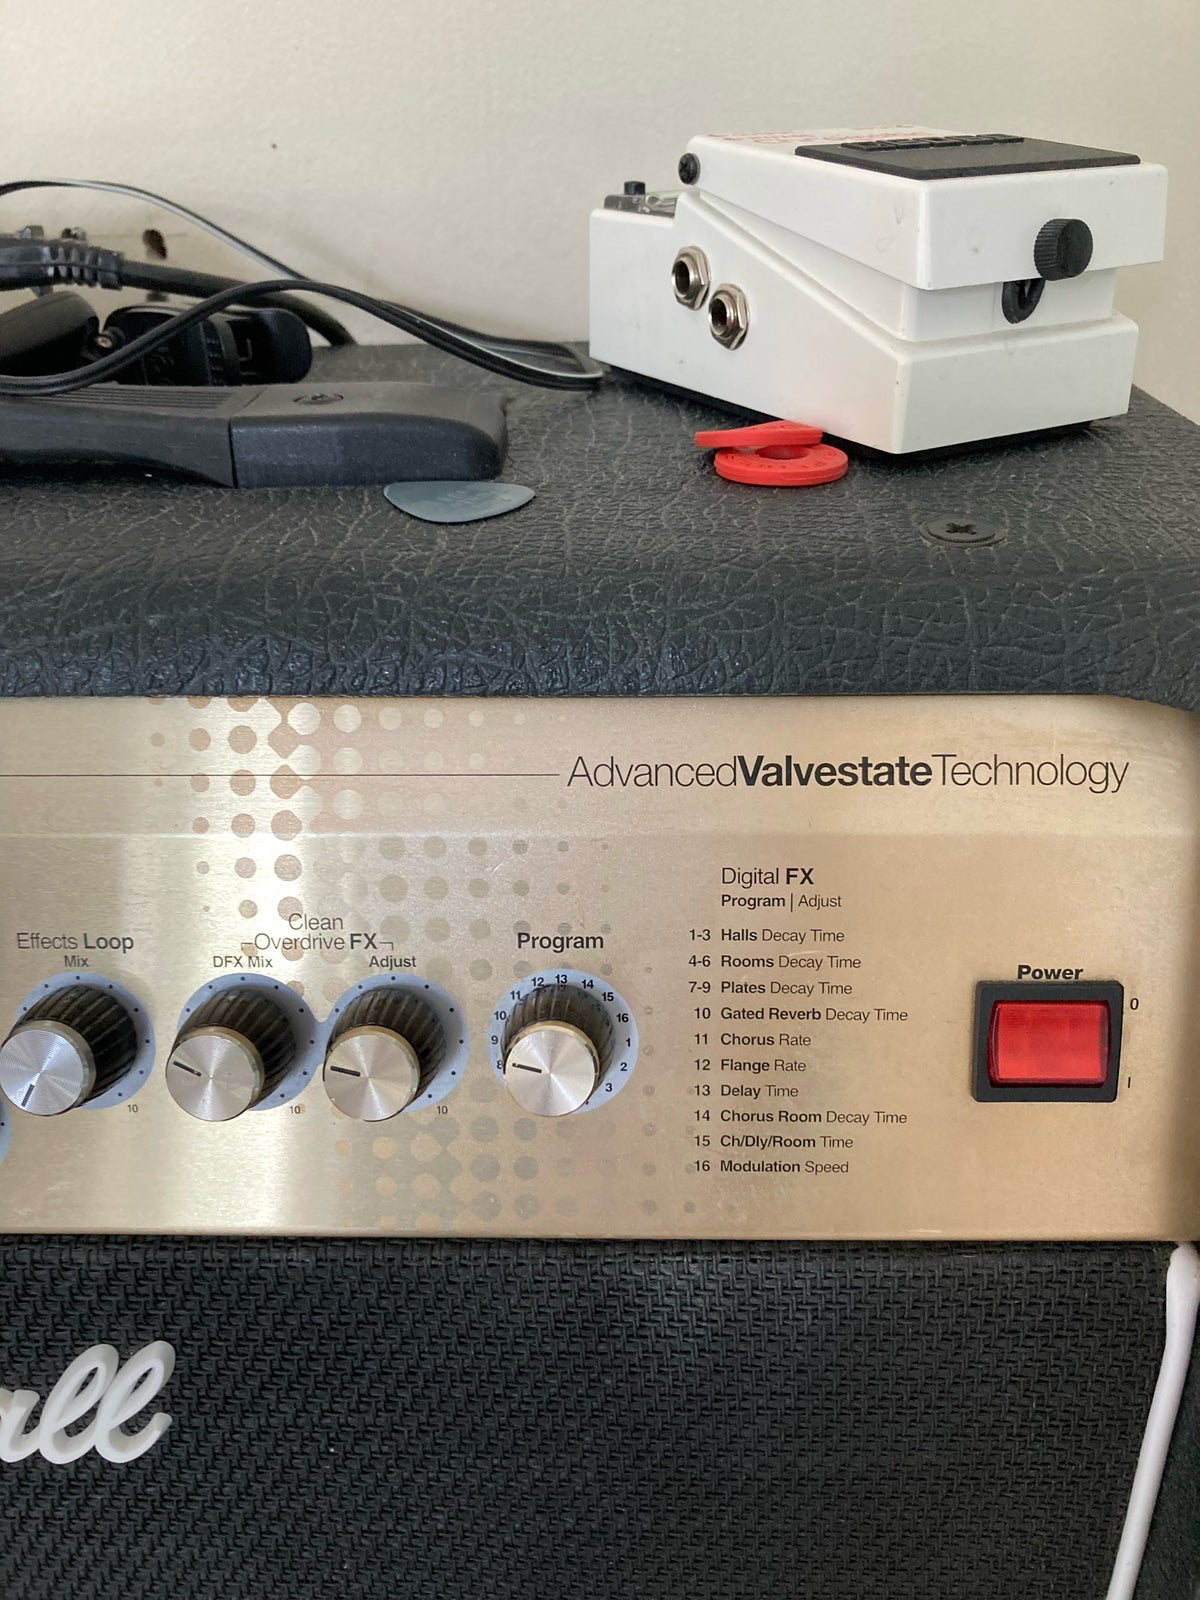 Guitarcombo, Marshall AVT100, 100 W